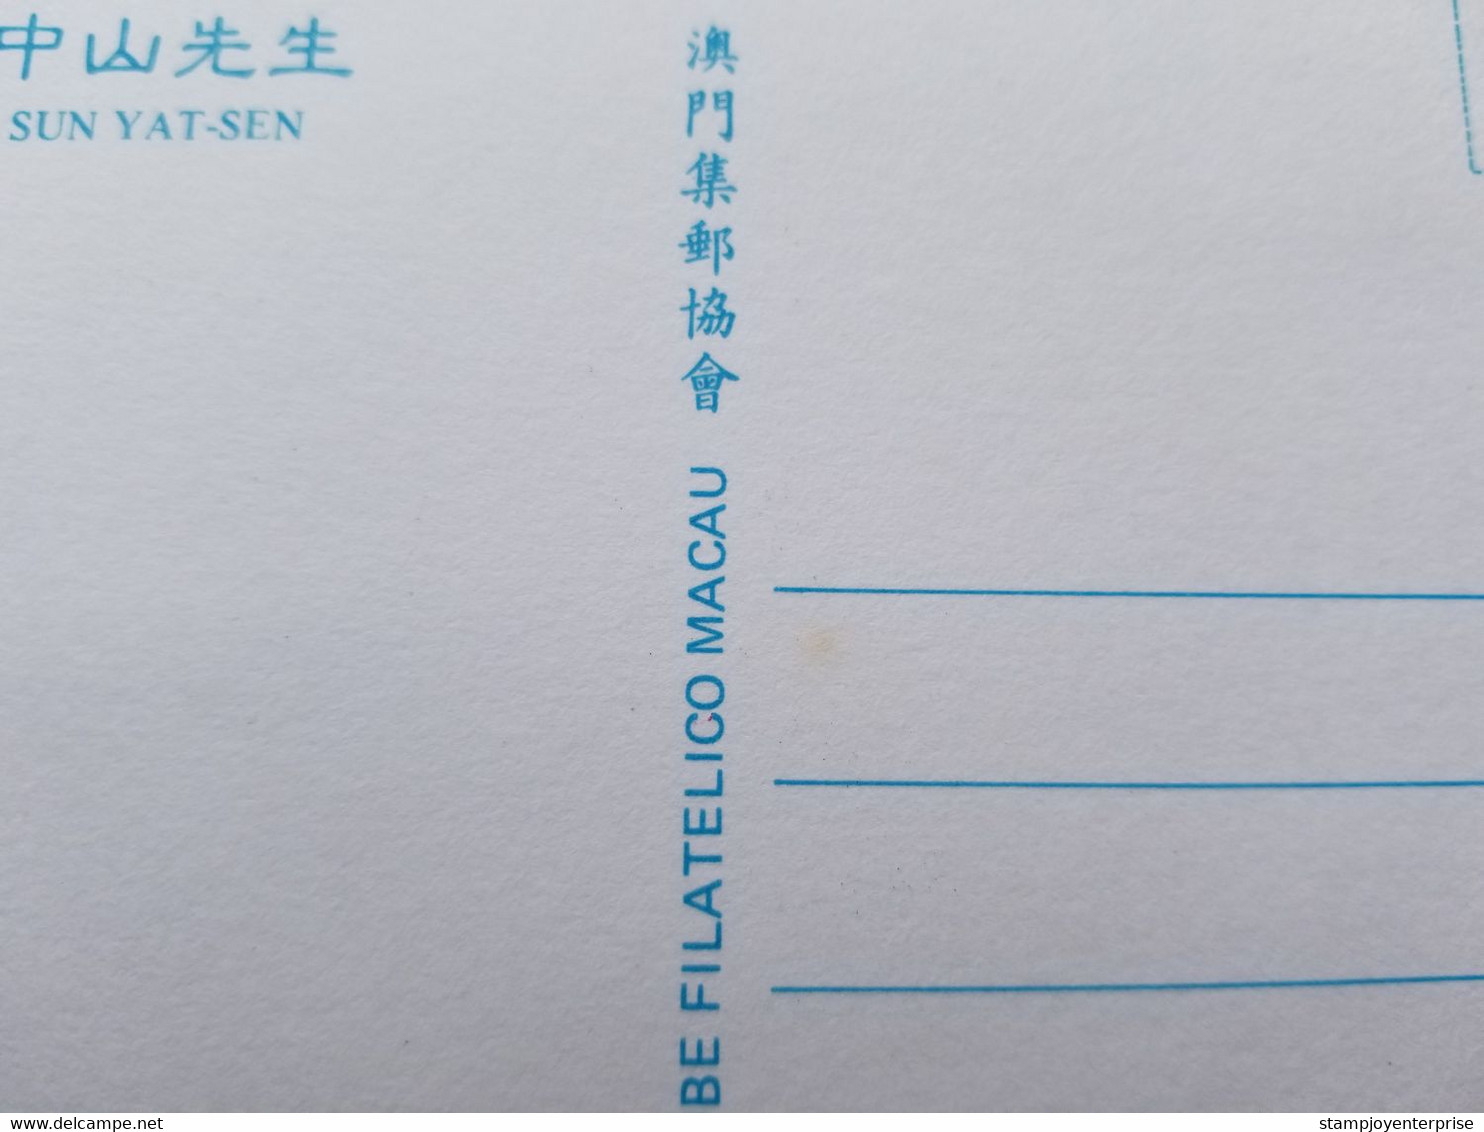 Macau Macao 120th Anniversary Of Dr. Sun Yat Sen 1986 (maxicard) *see Scan - Covers & Documents